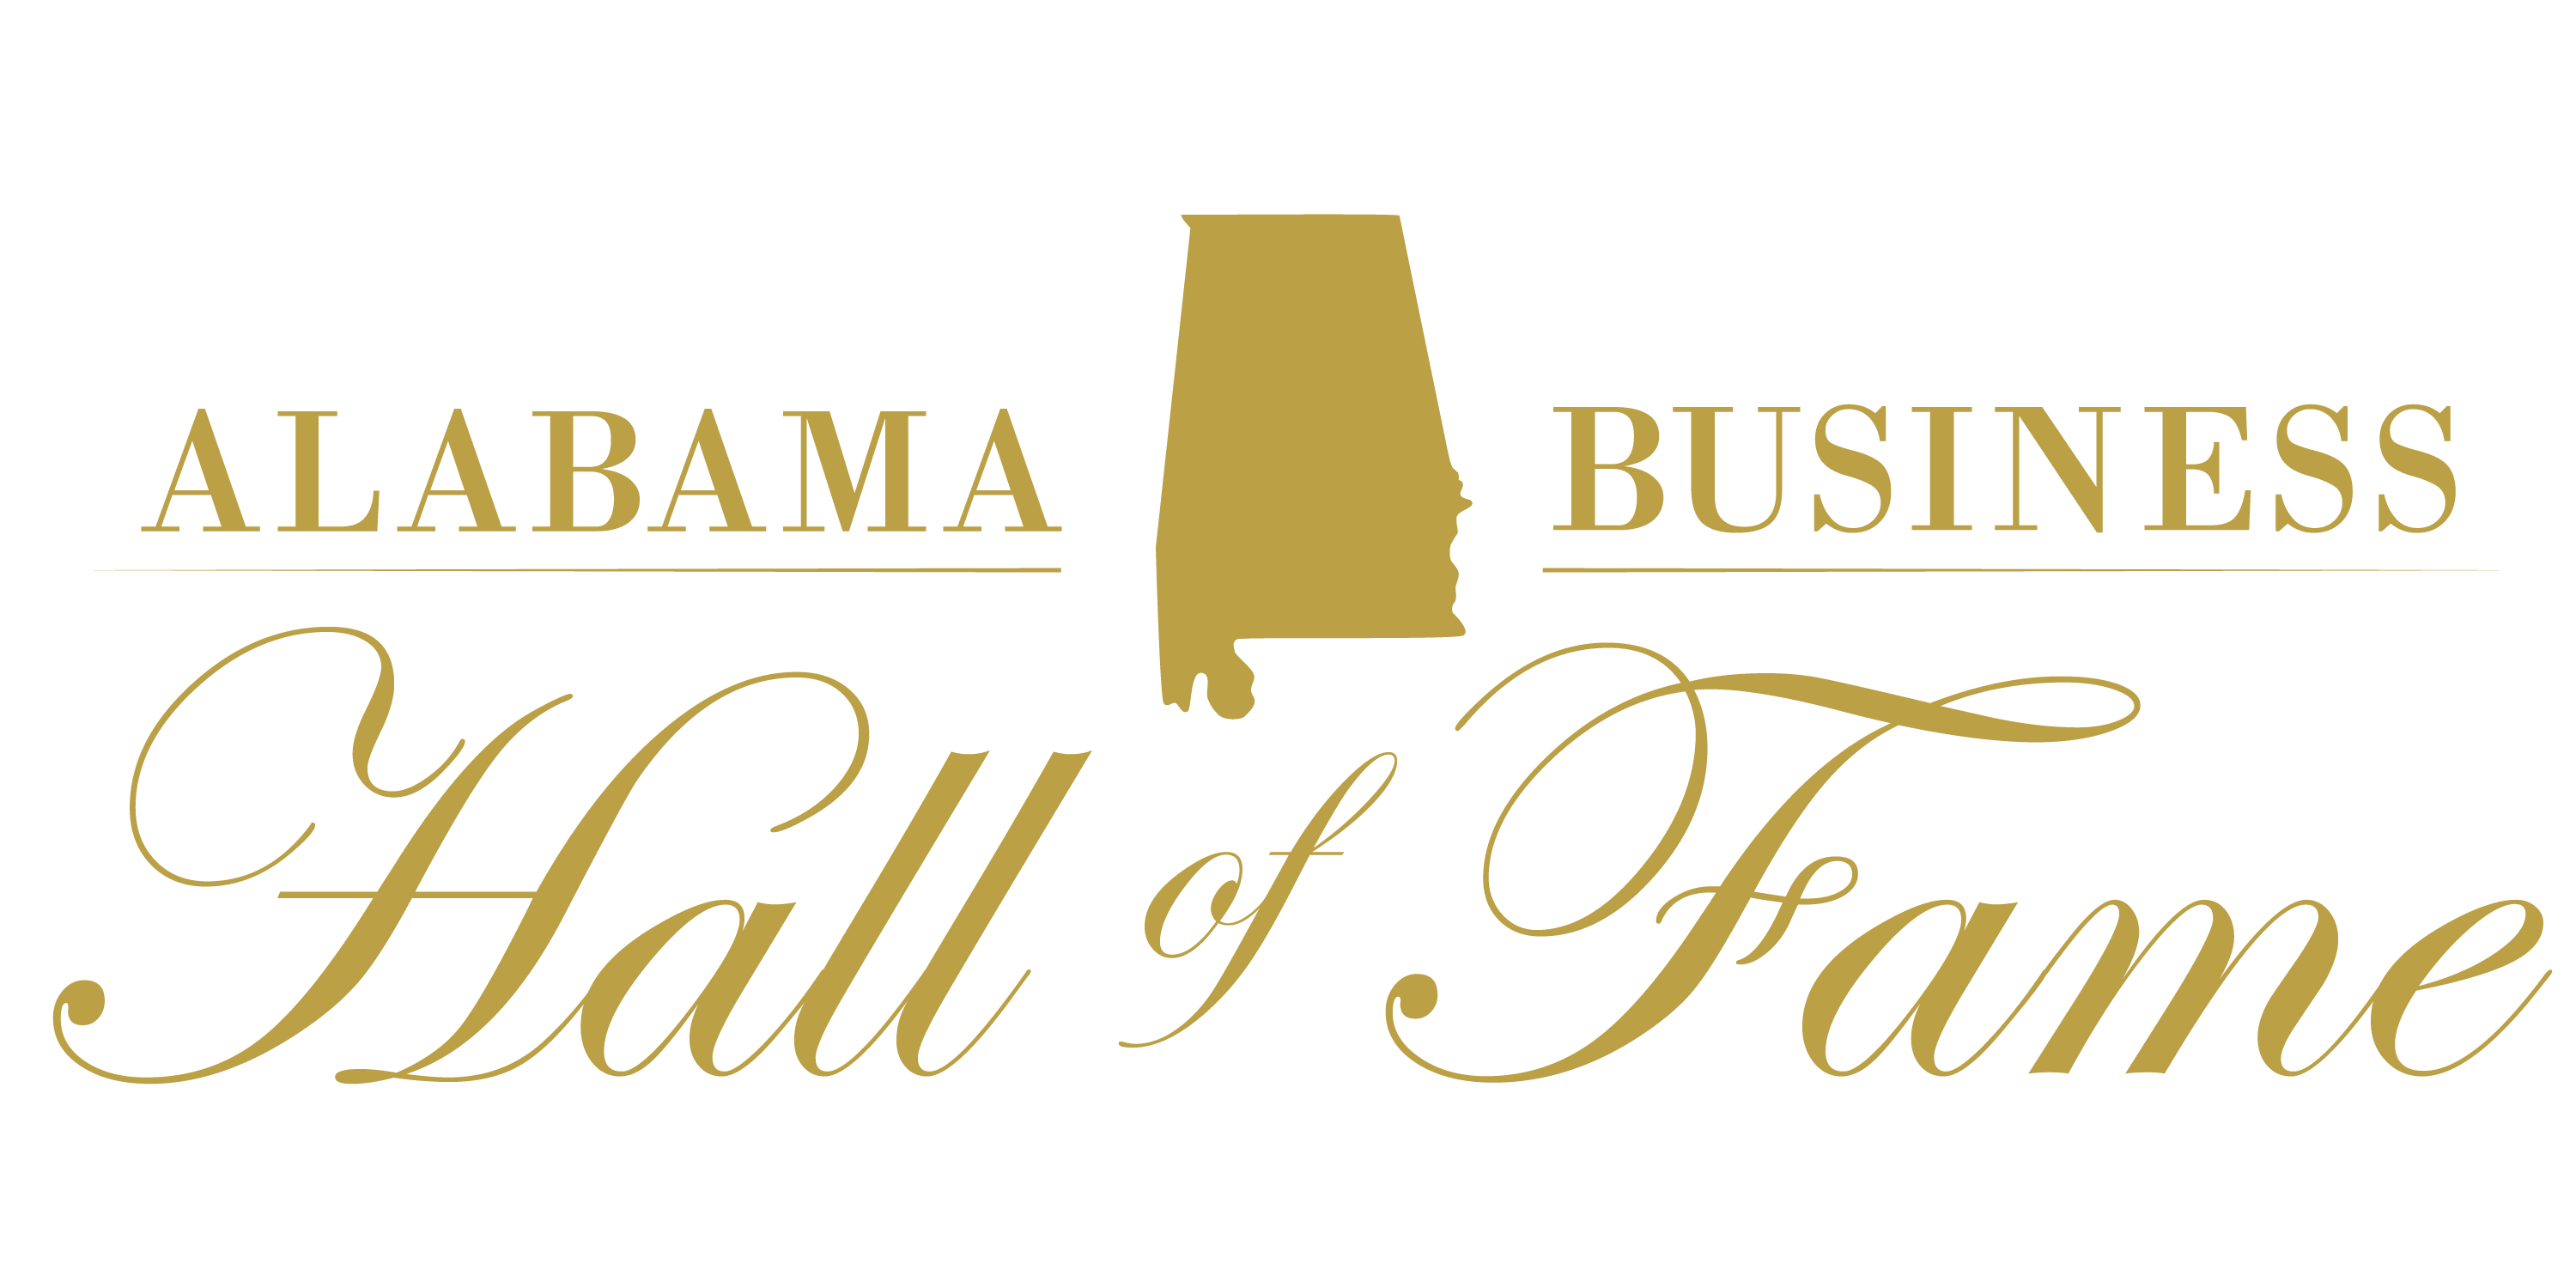 Alabama Business Hall fo Fame logo